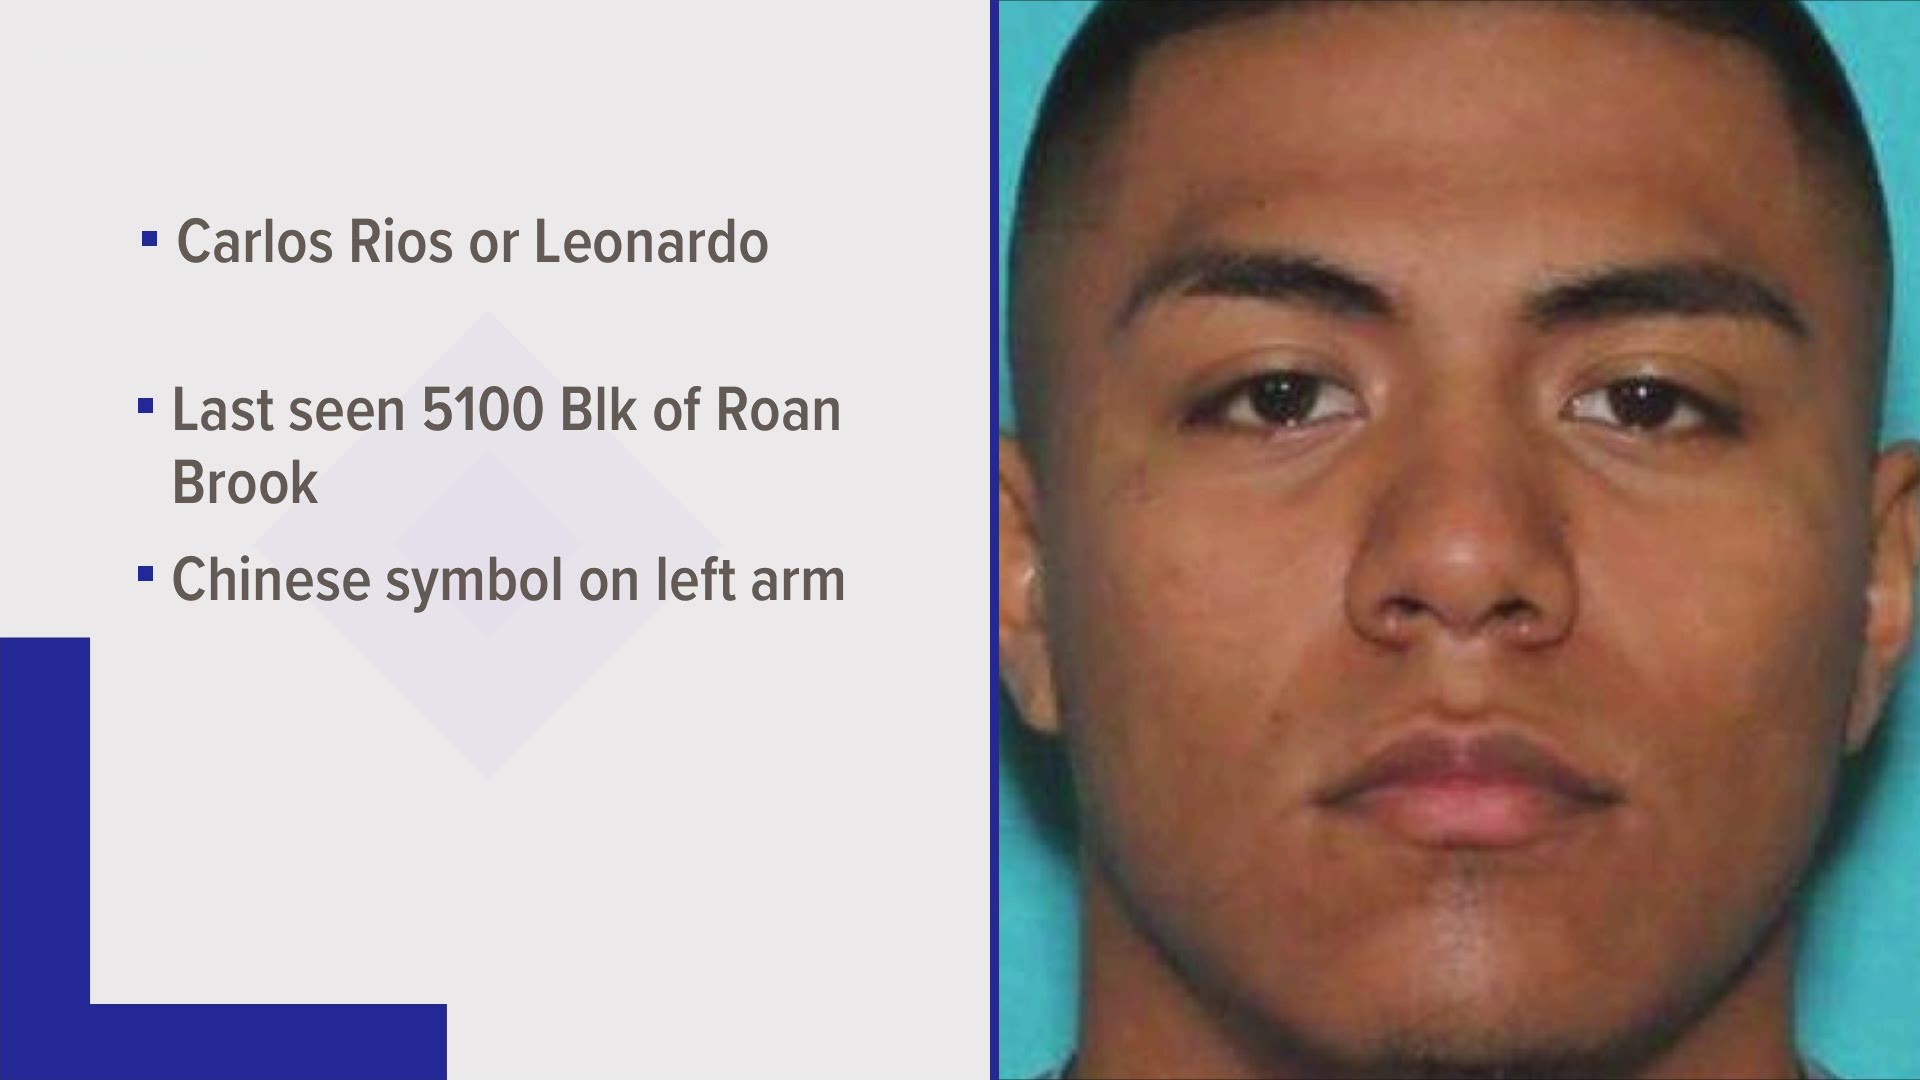 Carlos Rios, who goes by Leonardo, was last seen in the 5100 block of Roan Brook on October 11.